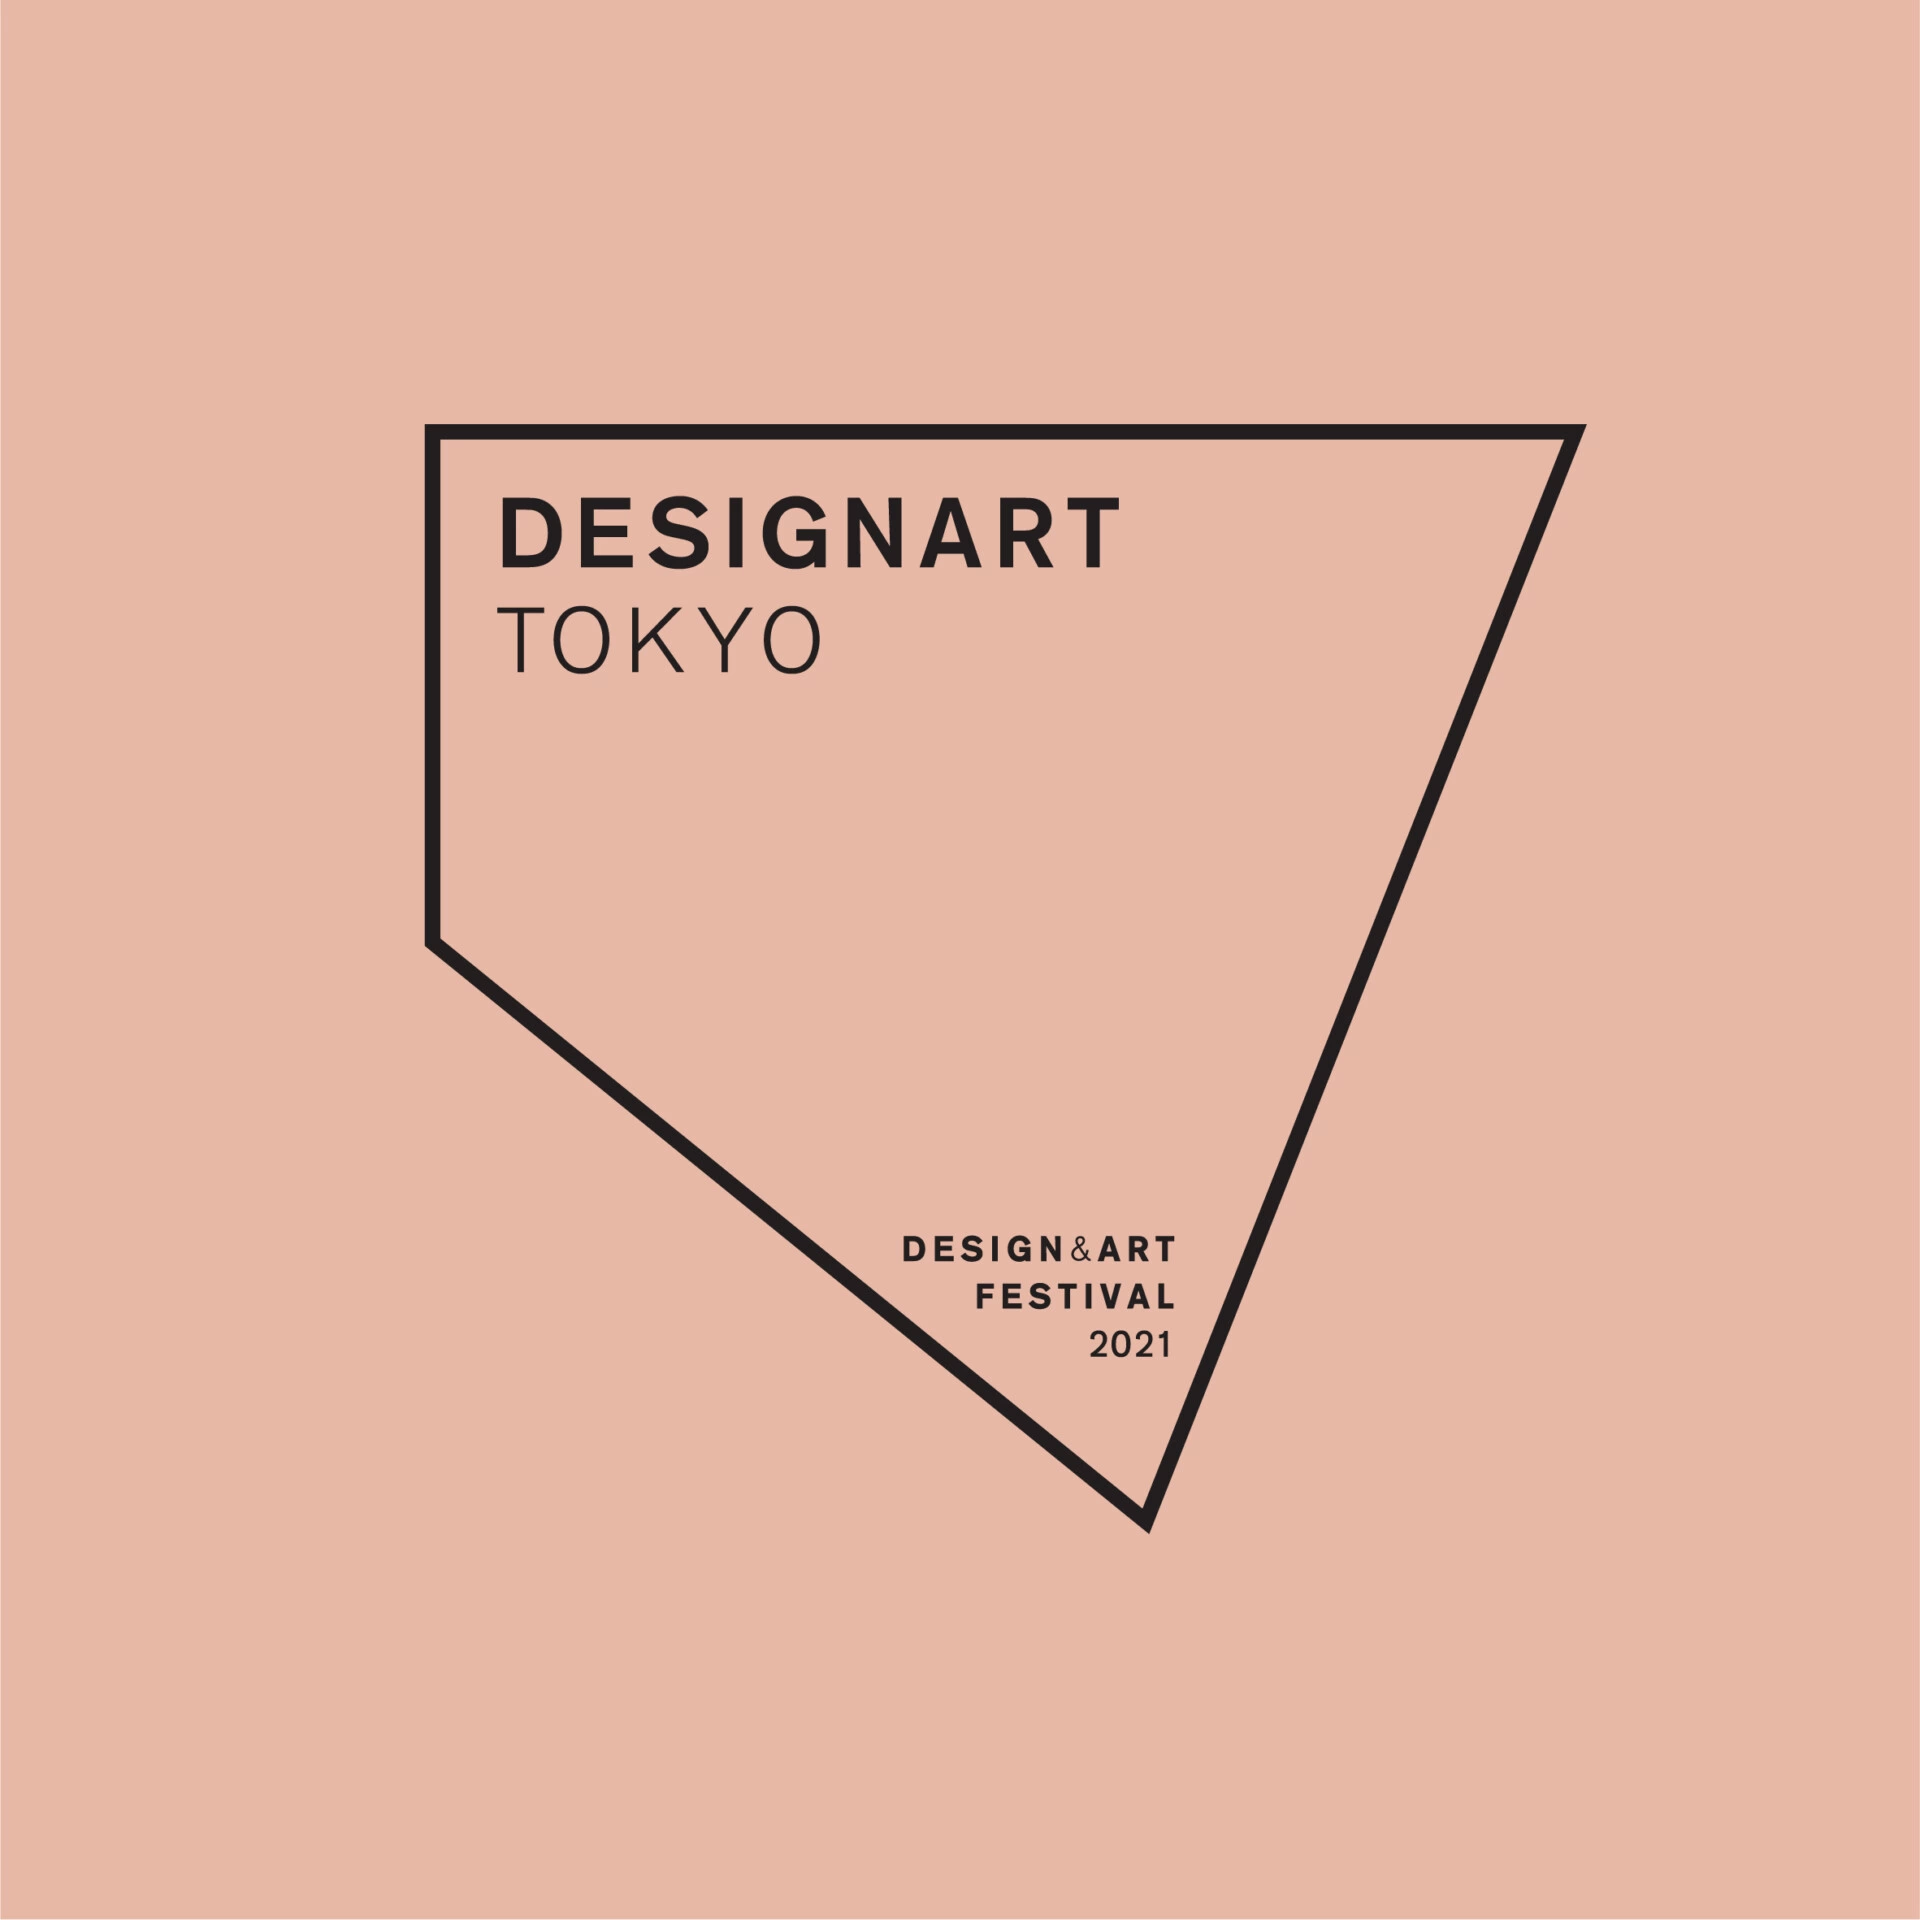 DESIGNART TOKYO 2021